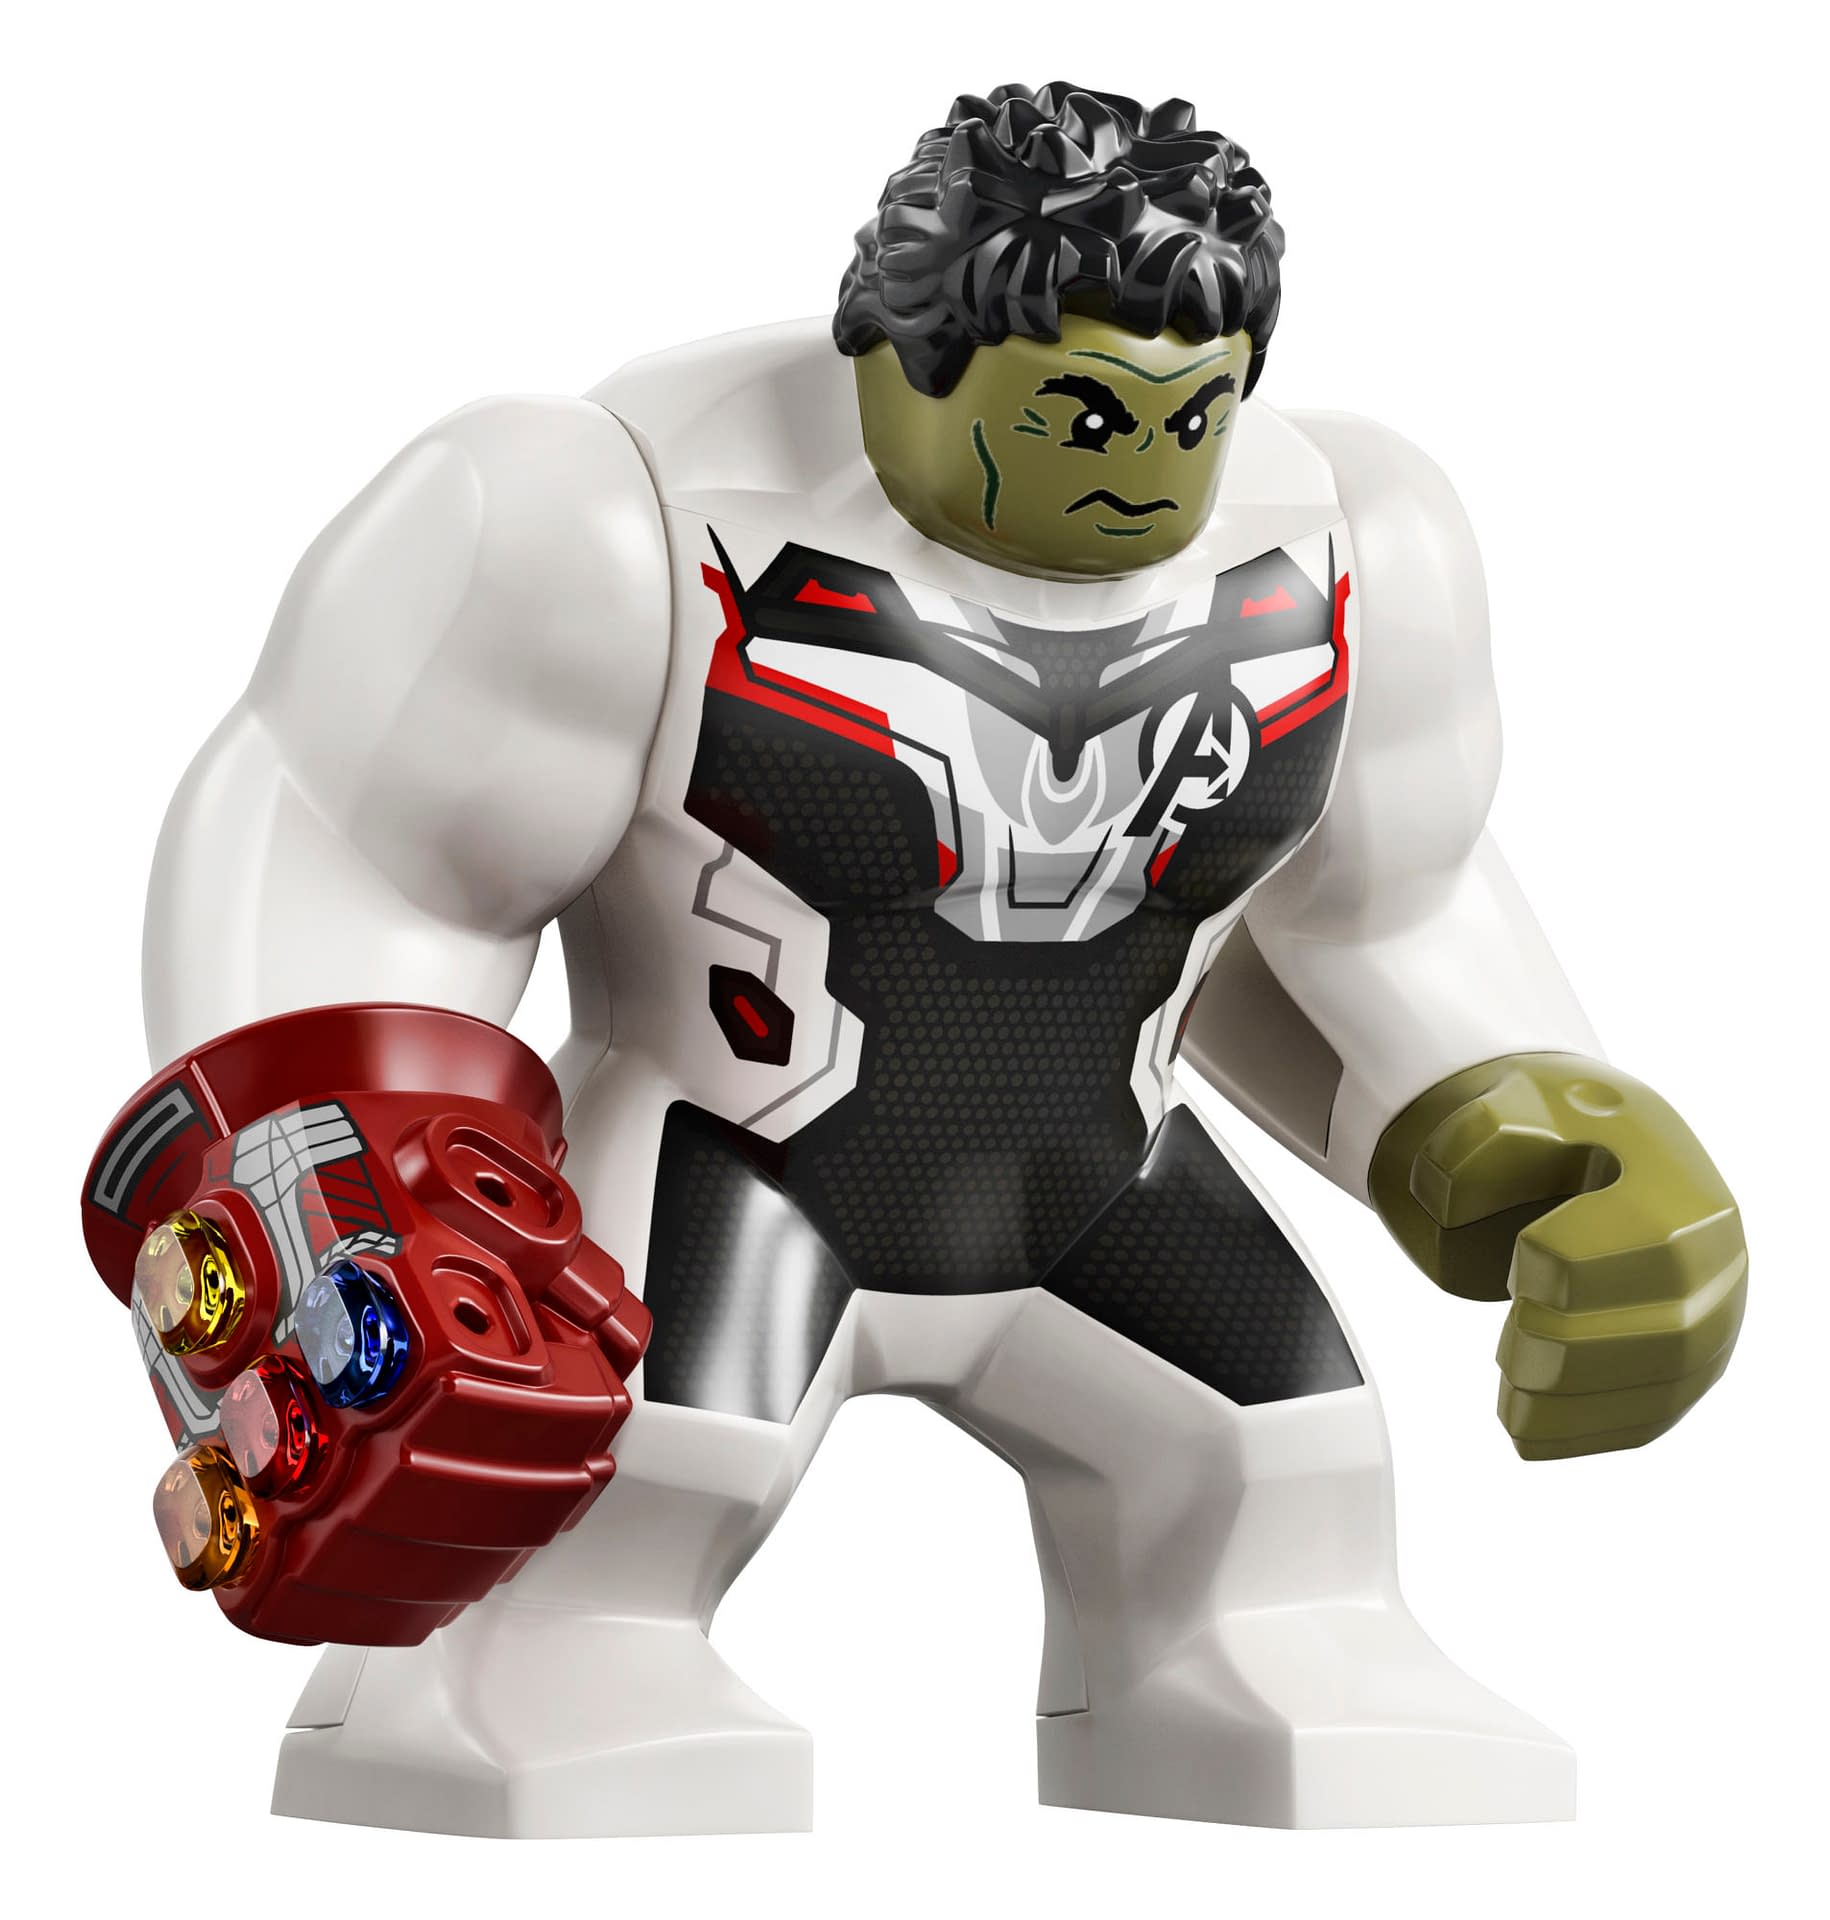 Avengers Endgame LEGO Hulk Drop Set Coming in the Fall